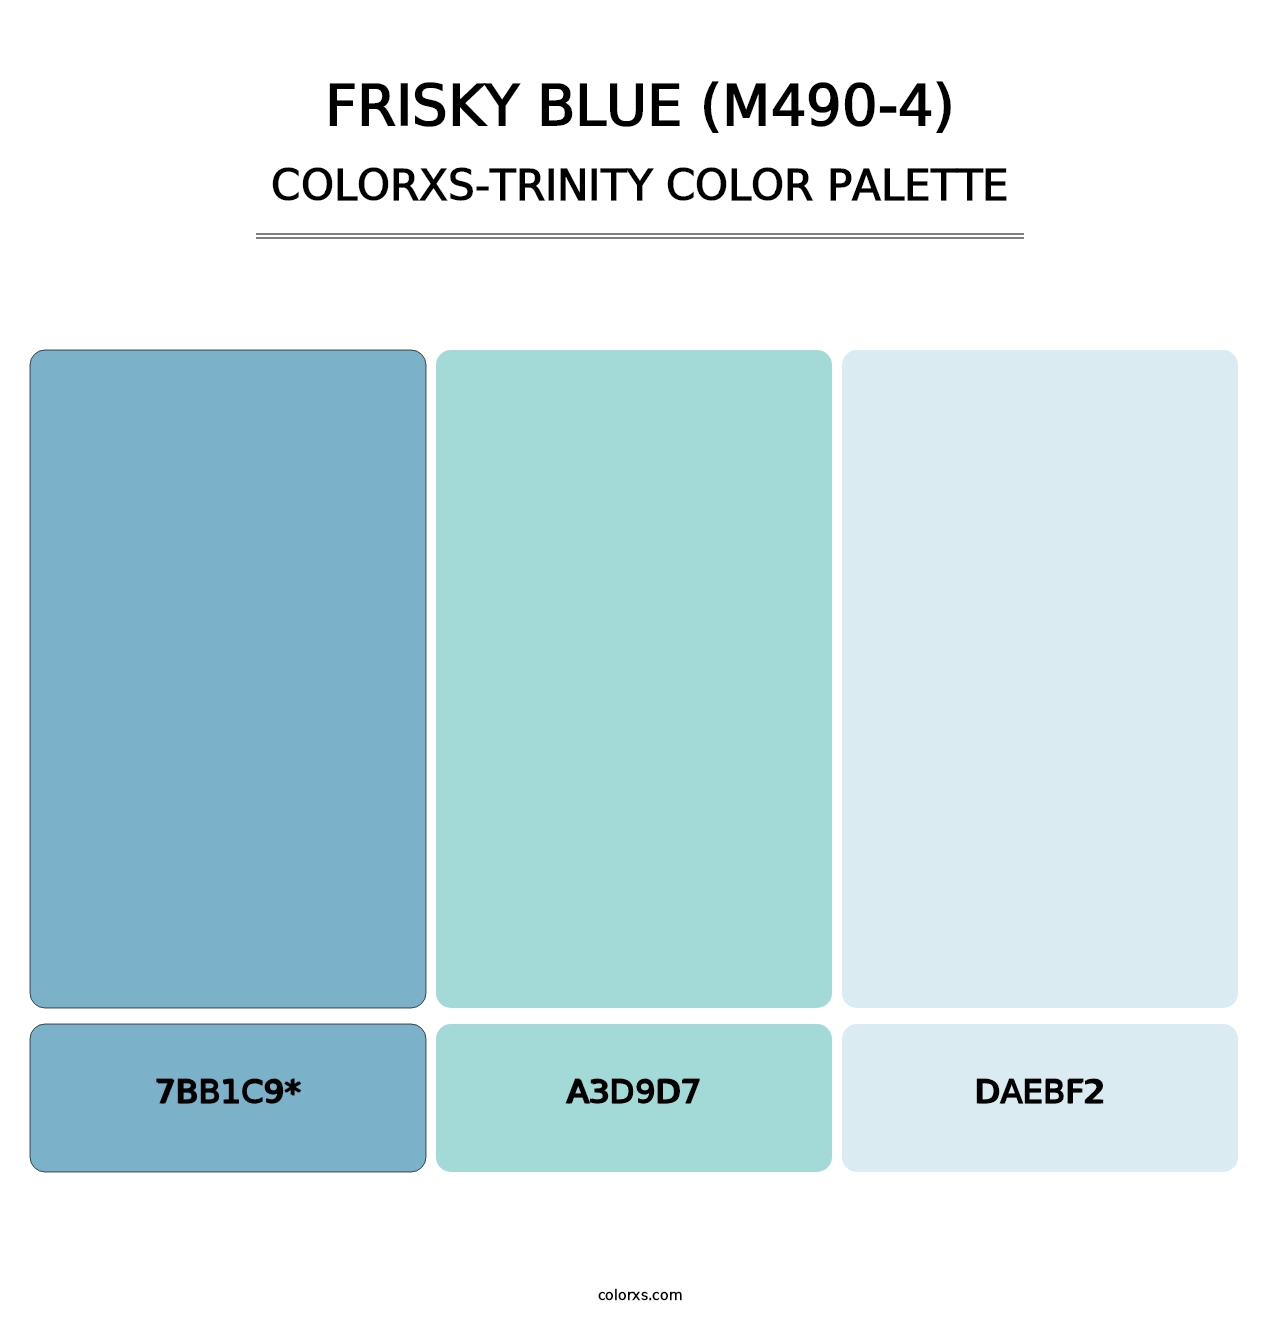 Frisky Blue (M490-4) - Colorxs Trinity Palette